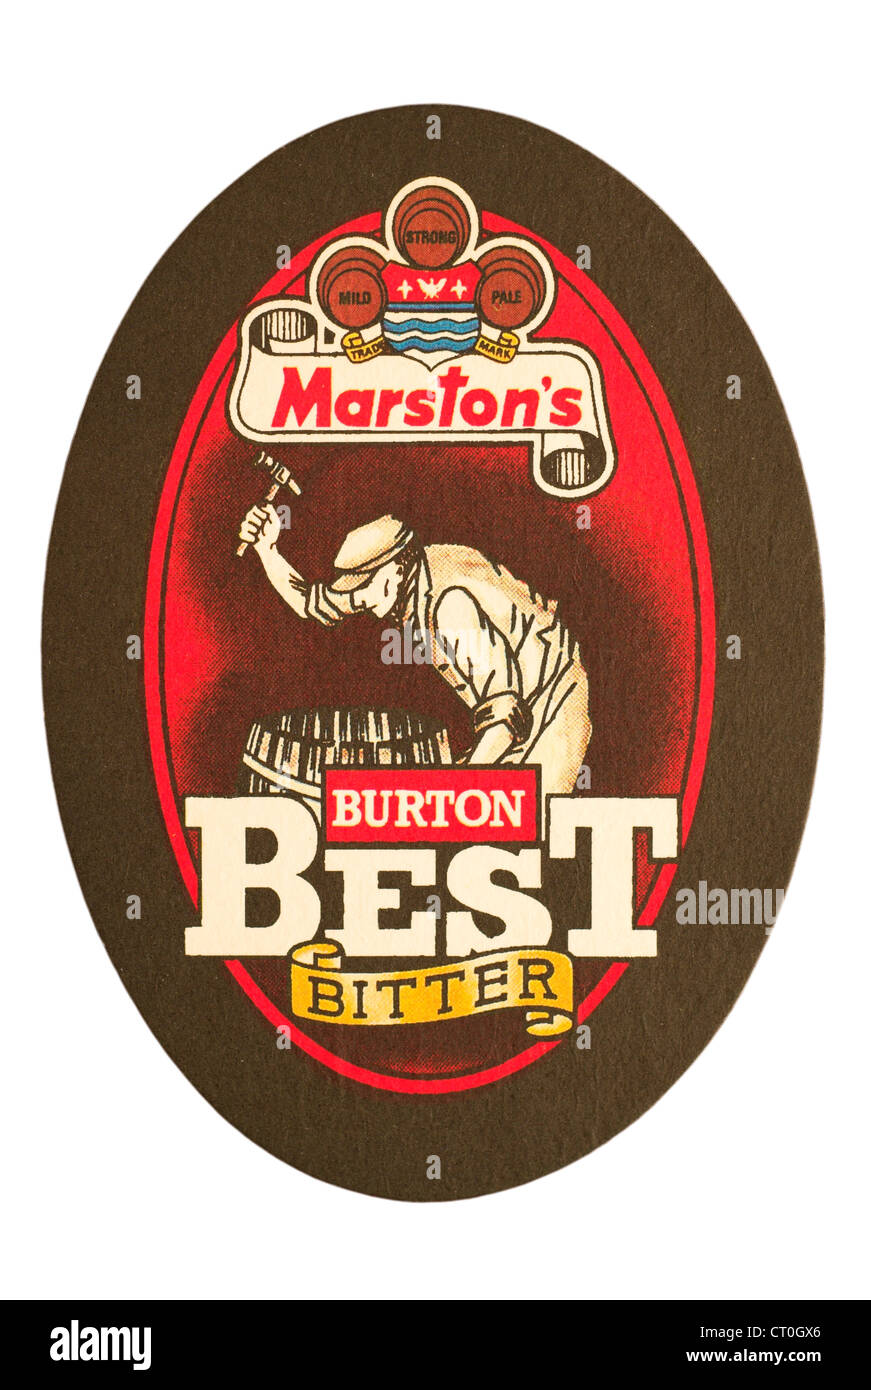 Beer Mat / drip mat - Marston's Brewery, Burton upon Trent, England featuring an advert for Burton Best Bitter. Stock Photo